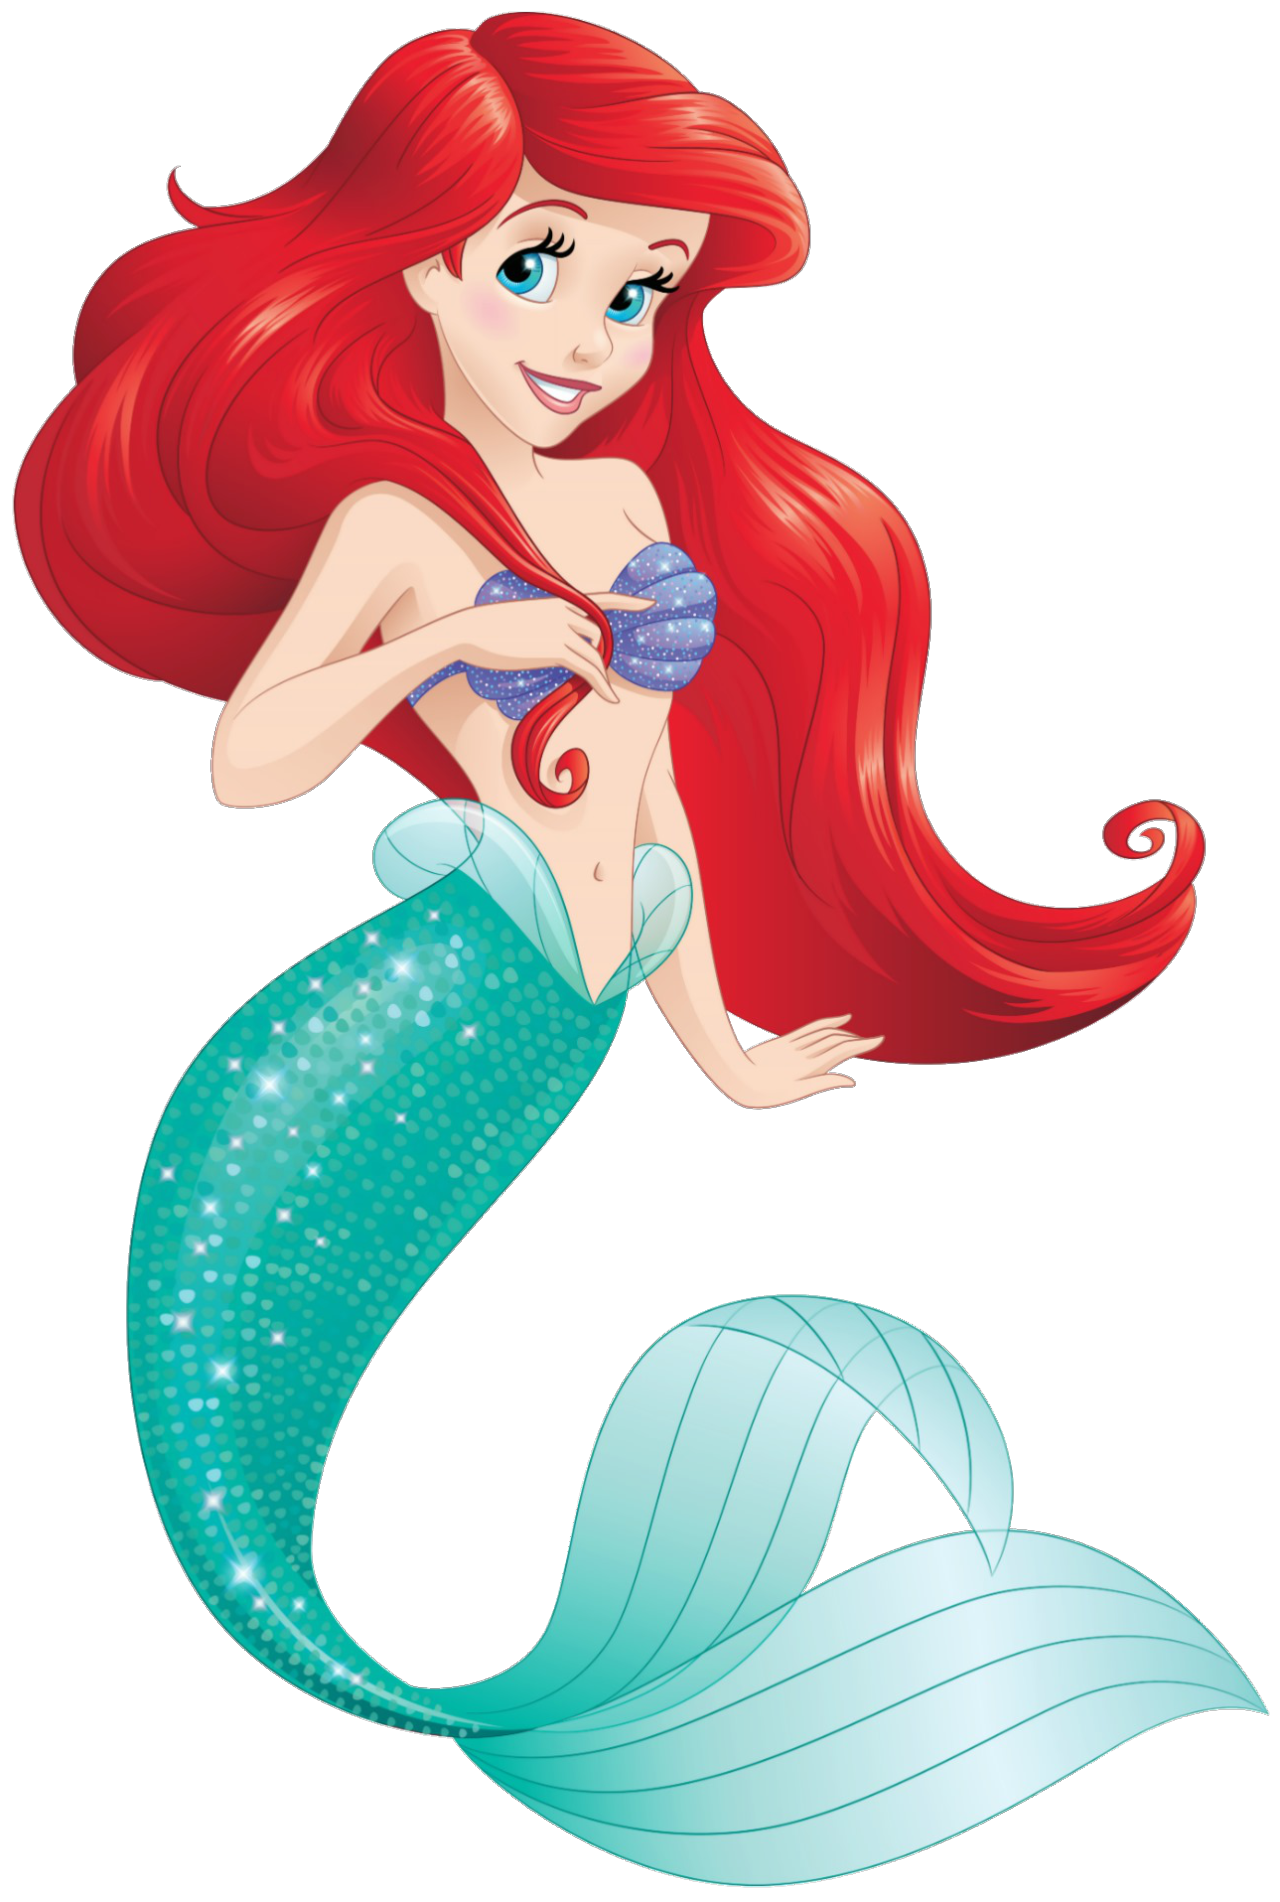 Ariel Mermaid Disney Princess